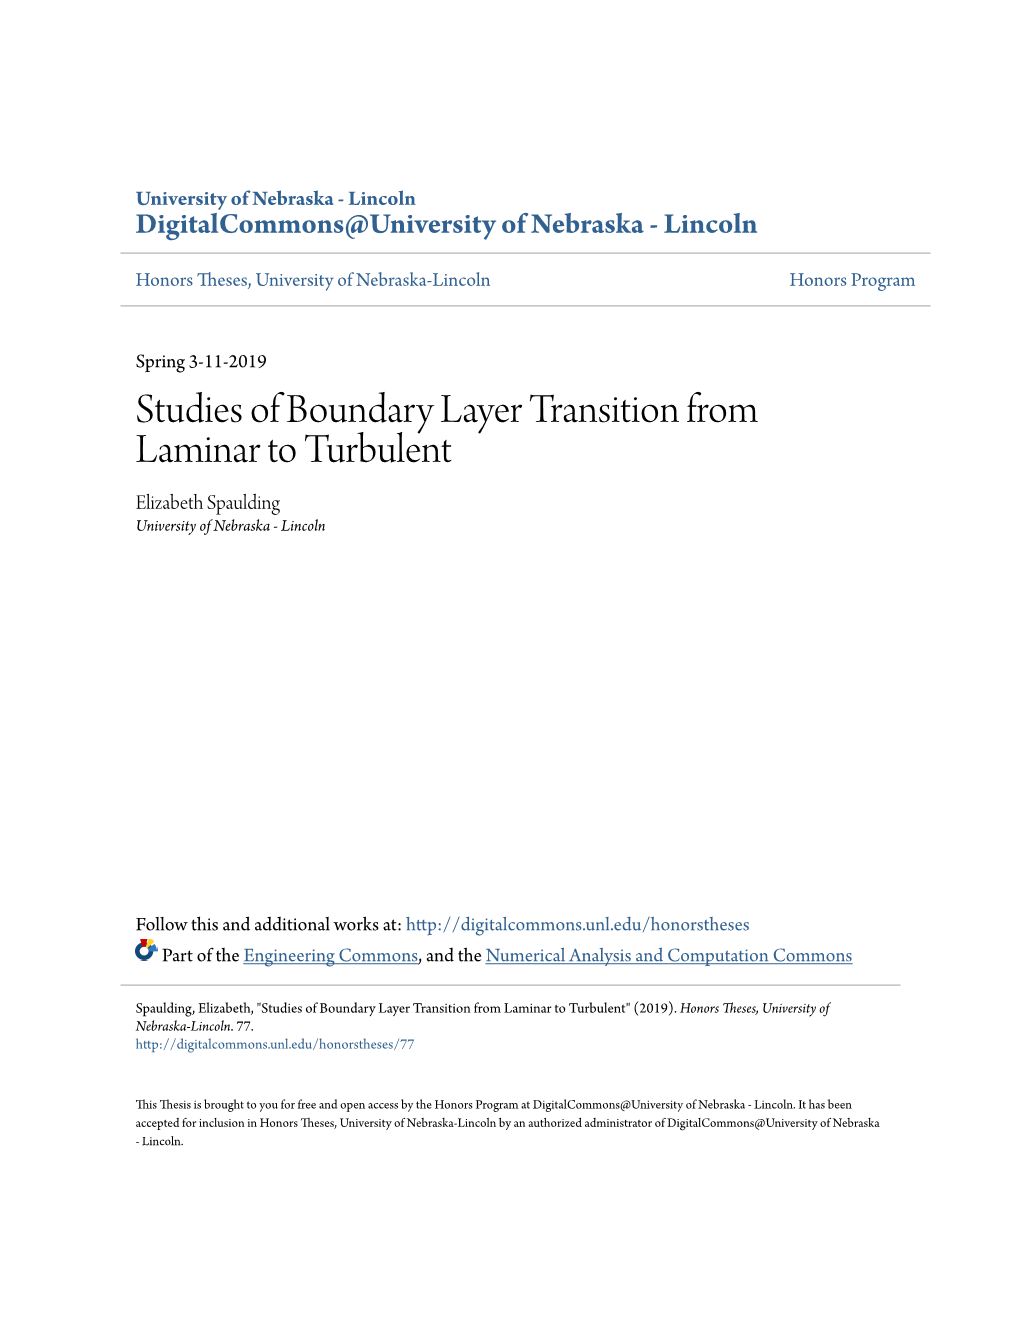 Studies of Boundary Layer Transition from Laminar to Turbulent Elizabeth Spaulding University of Nebraska - Lincoln